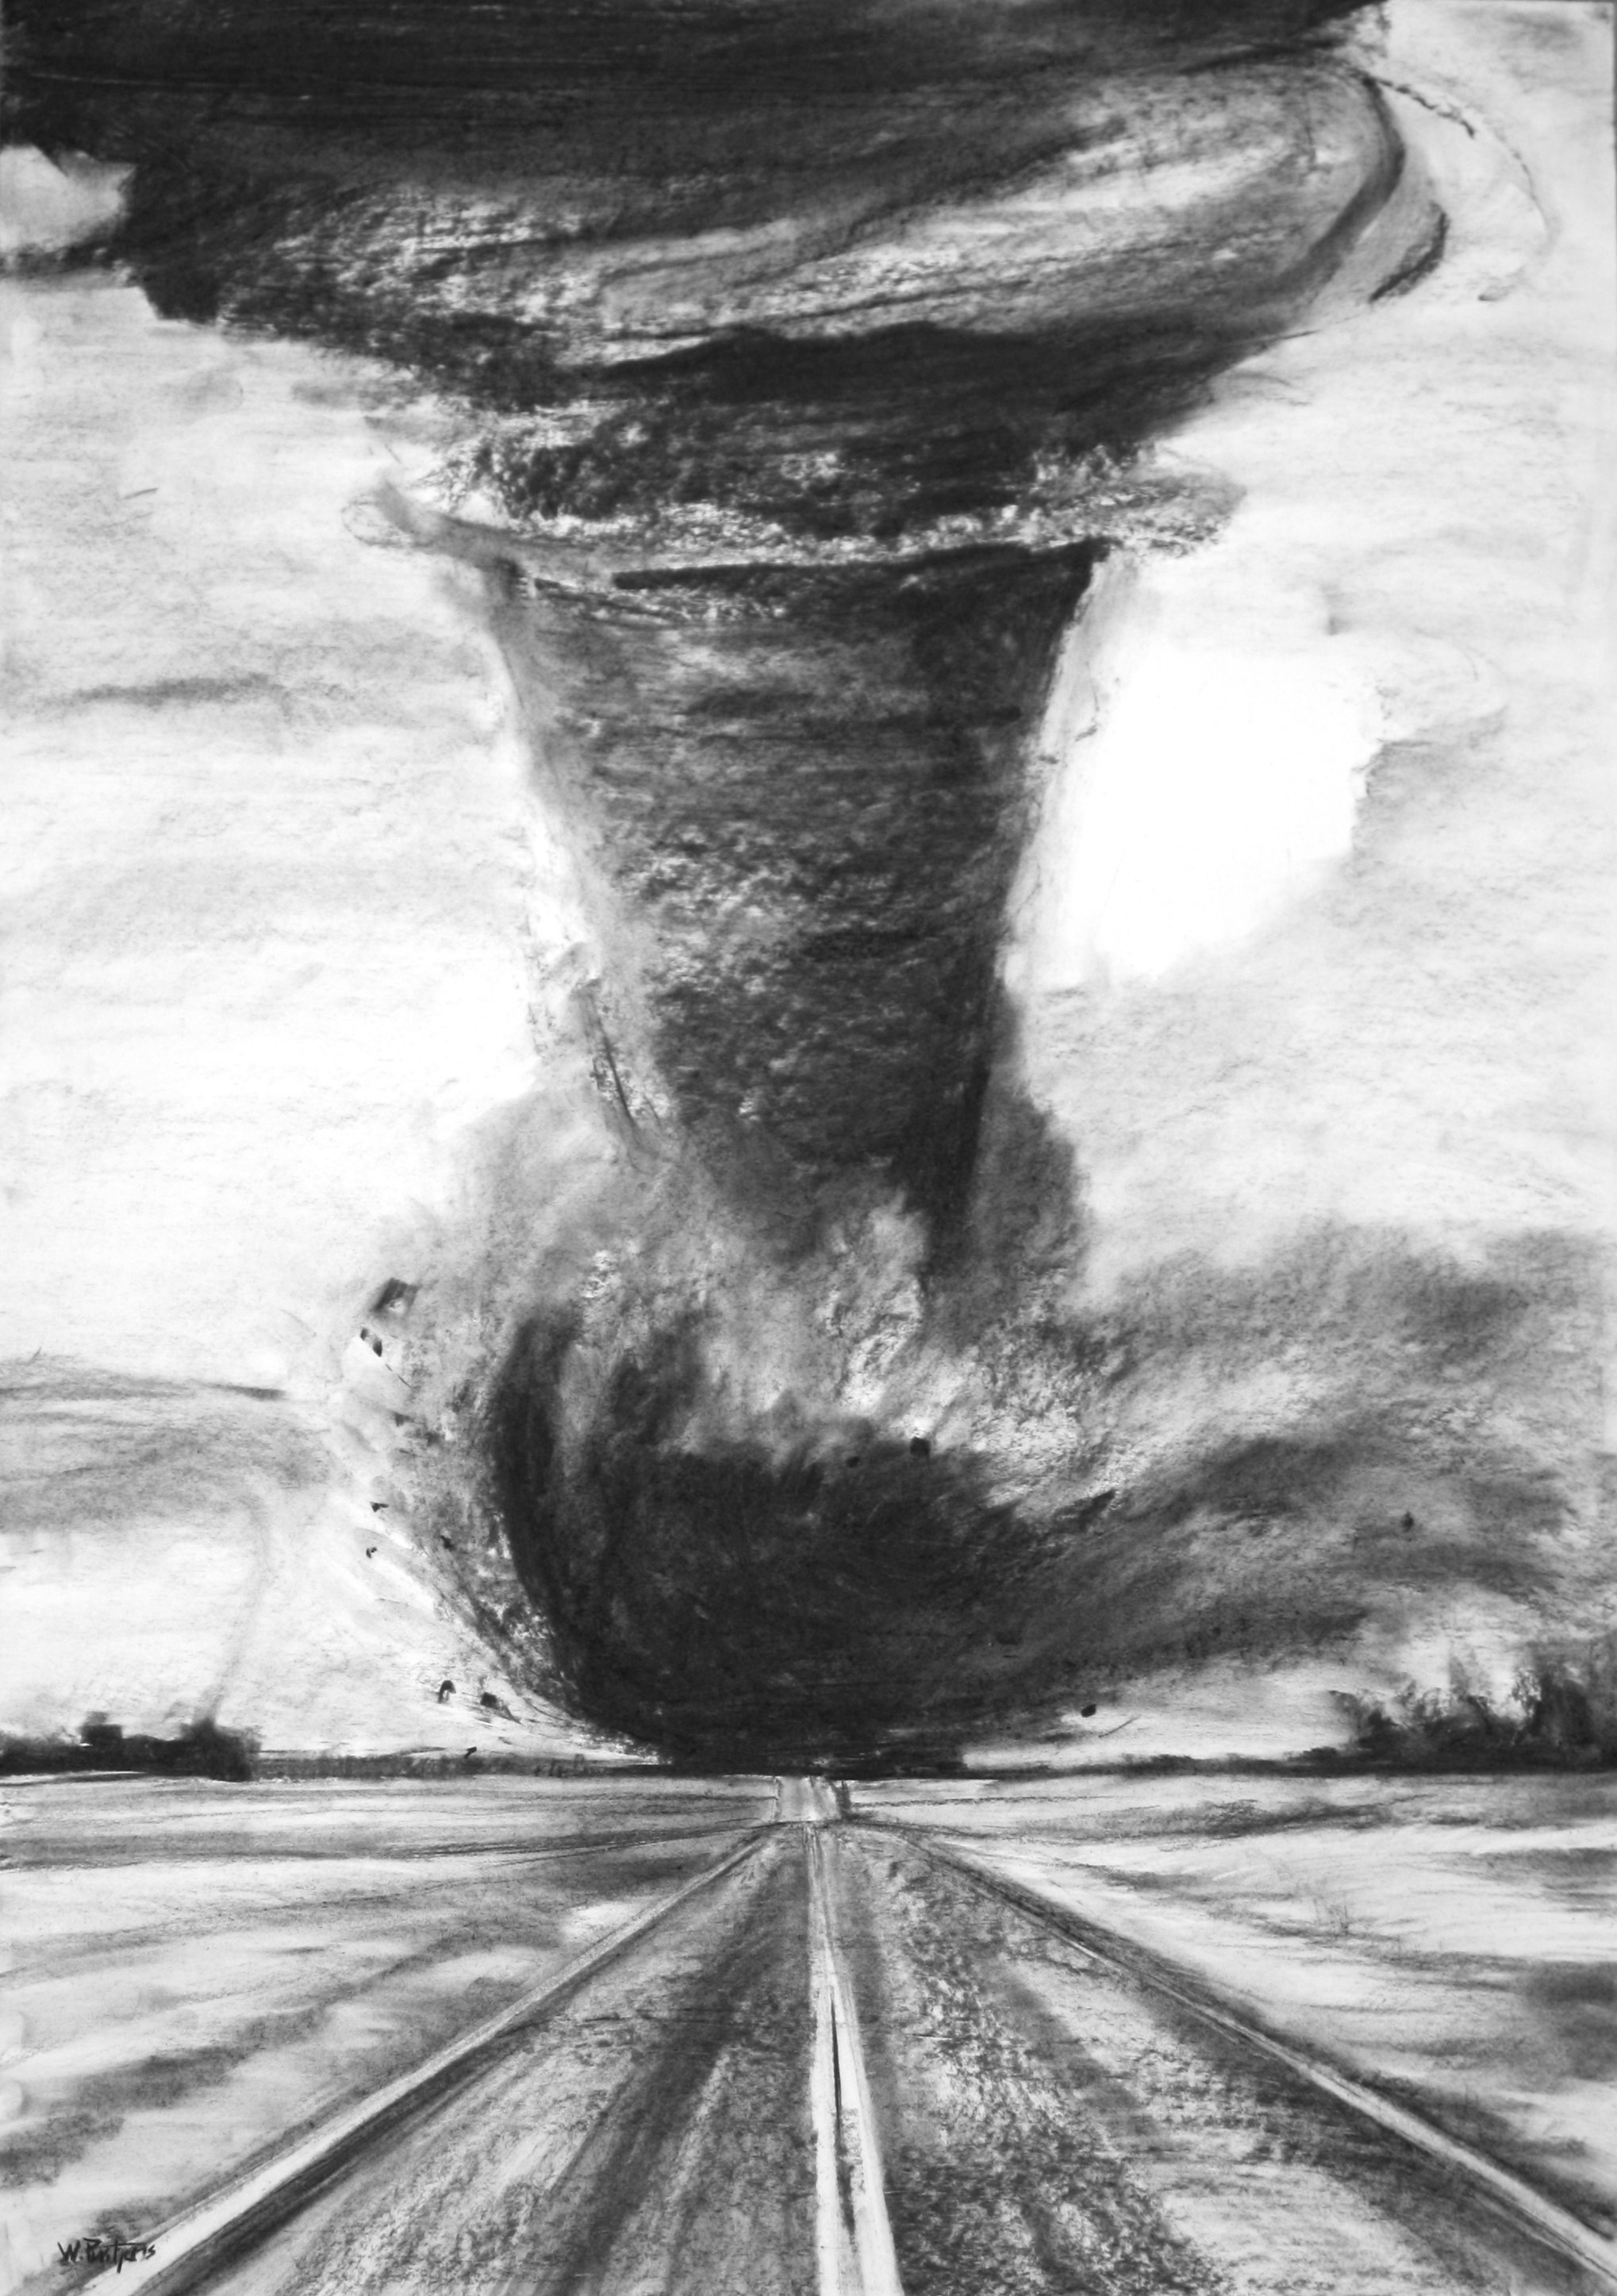 Tornado Drawing at Explore collection of Tornado